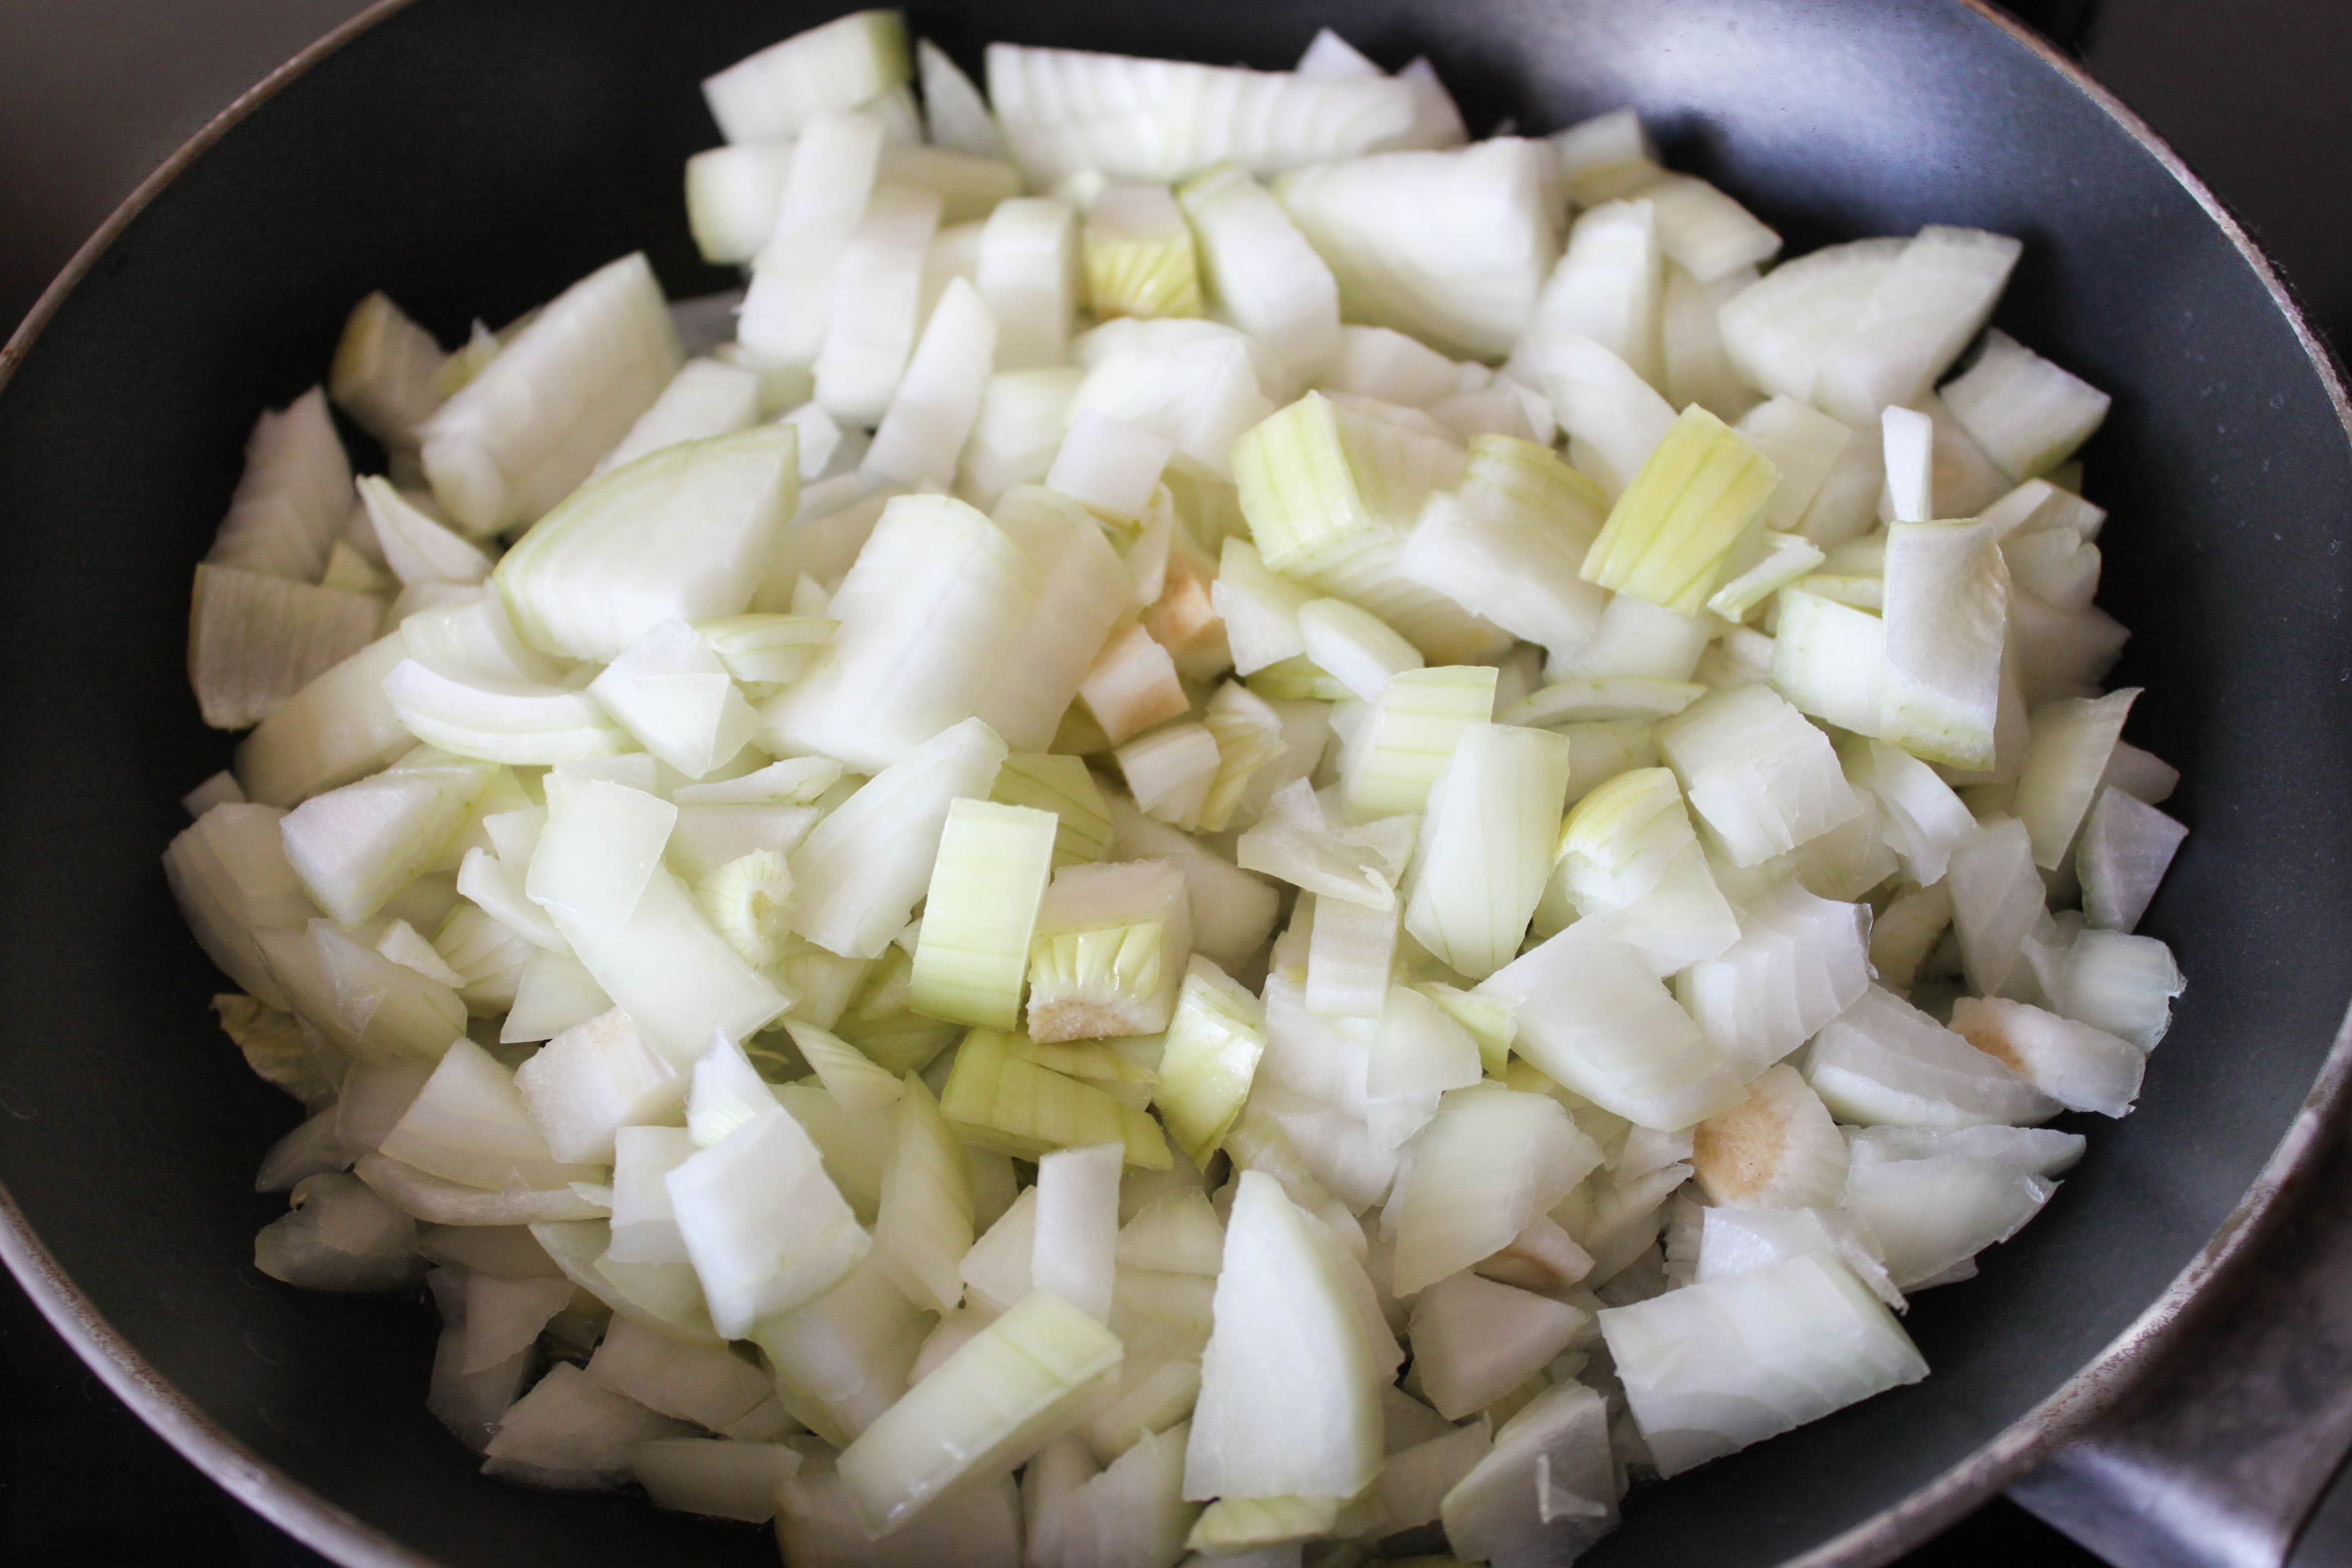 Saute chopped onions